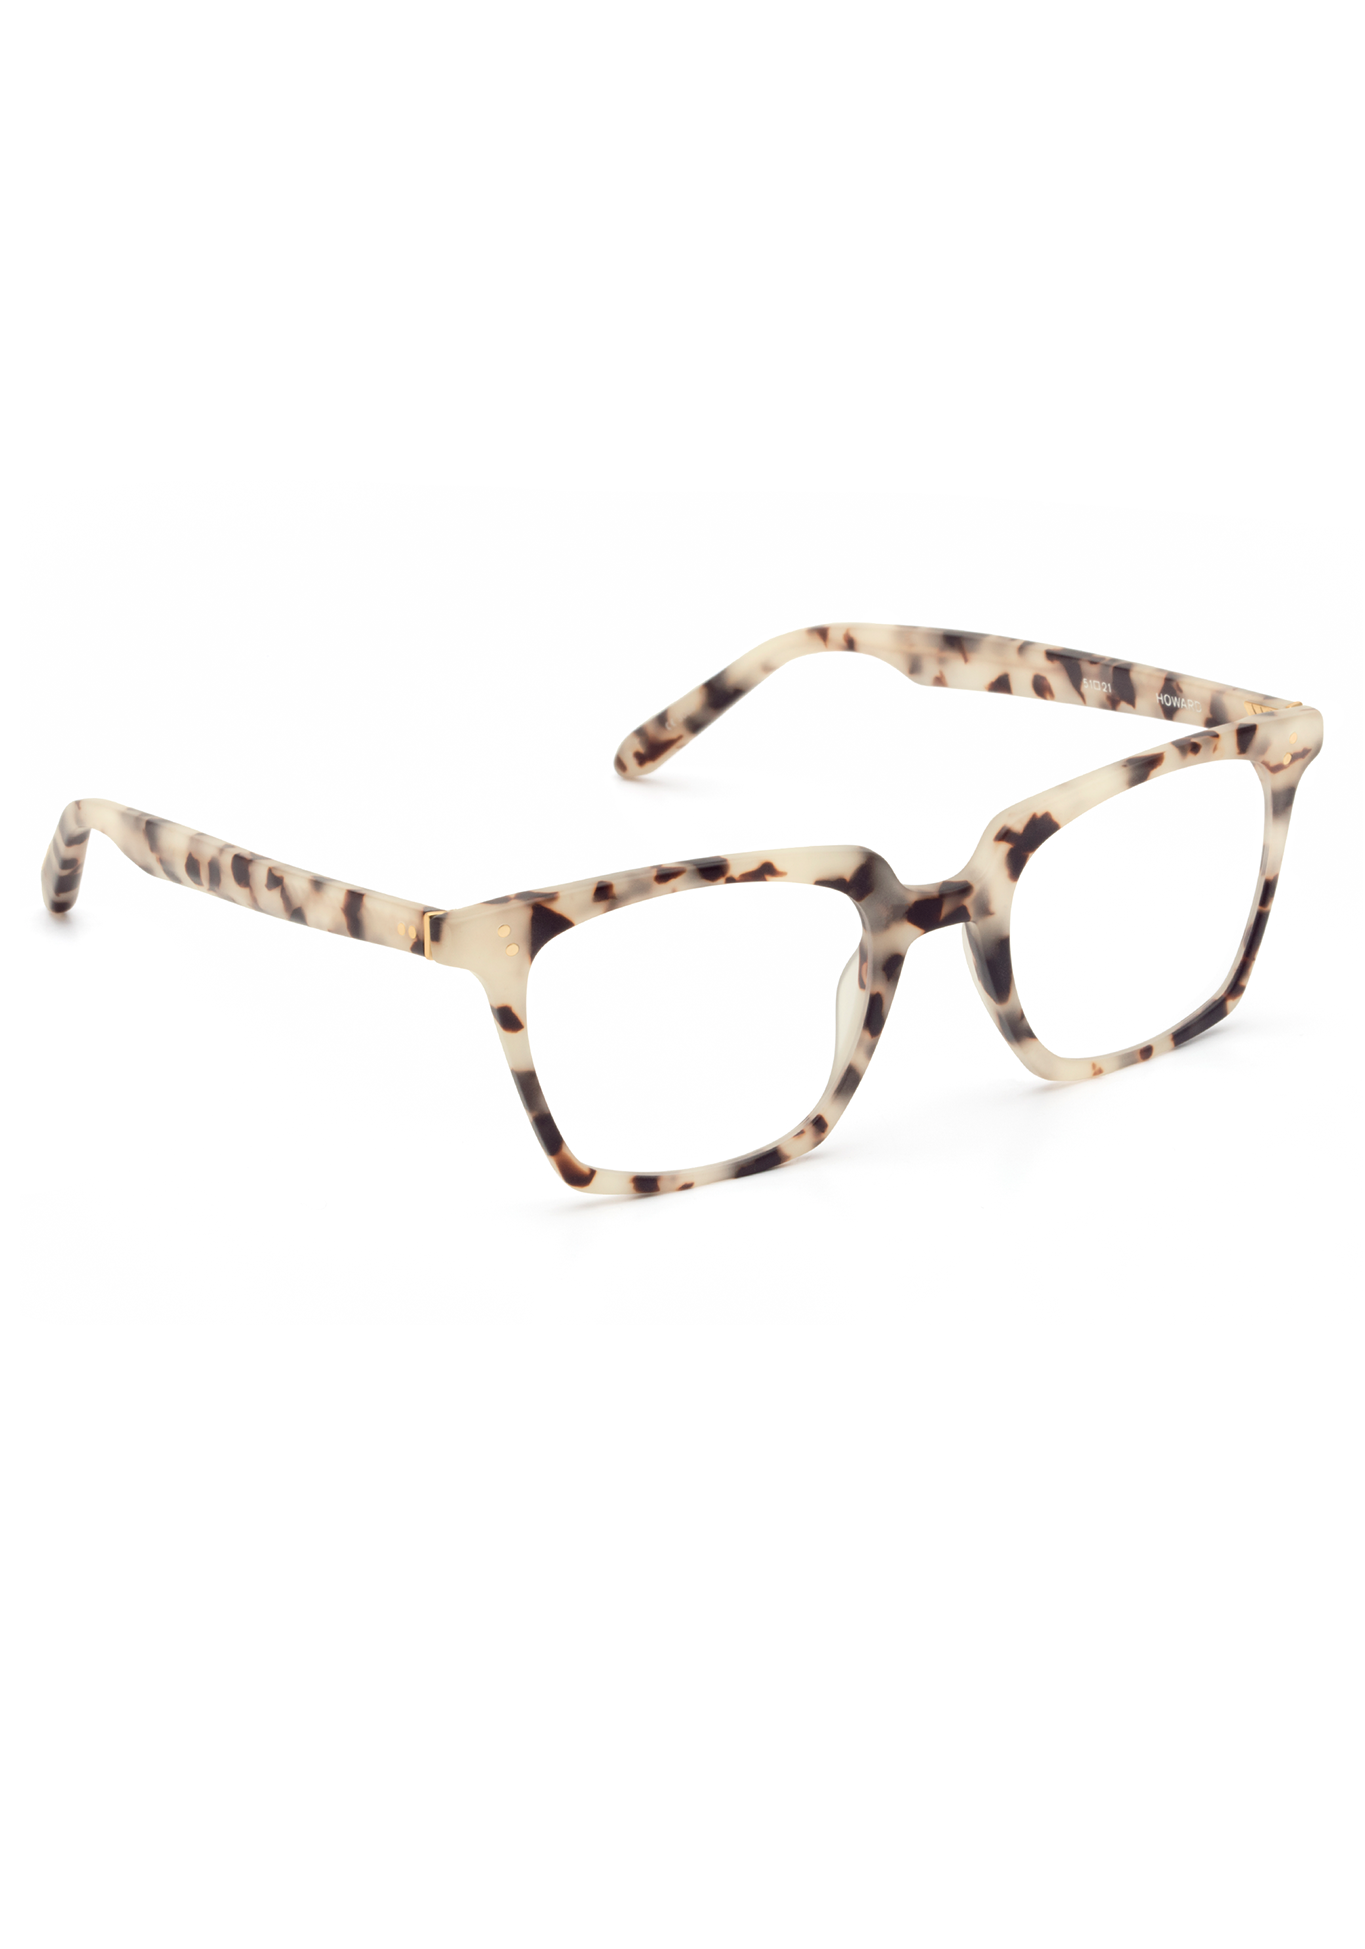 KREWE HOWARD | Matte Oyster, Luxury Tortoise Shell Handcrafted acetate eyeglasses